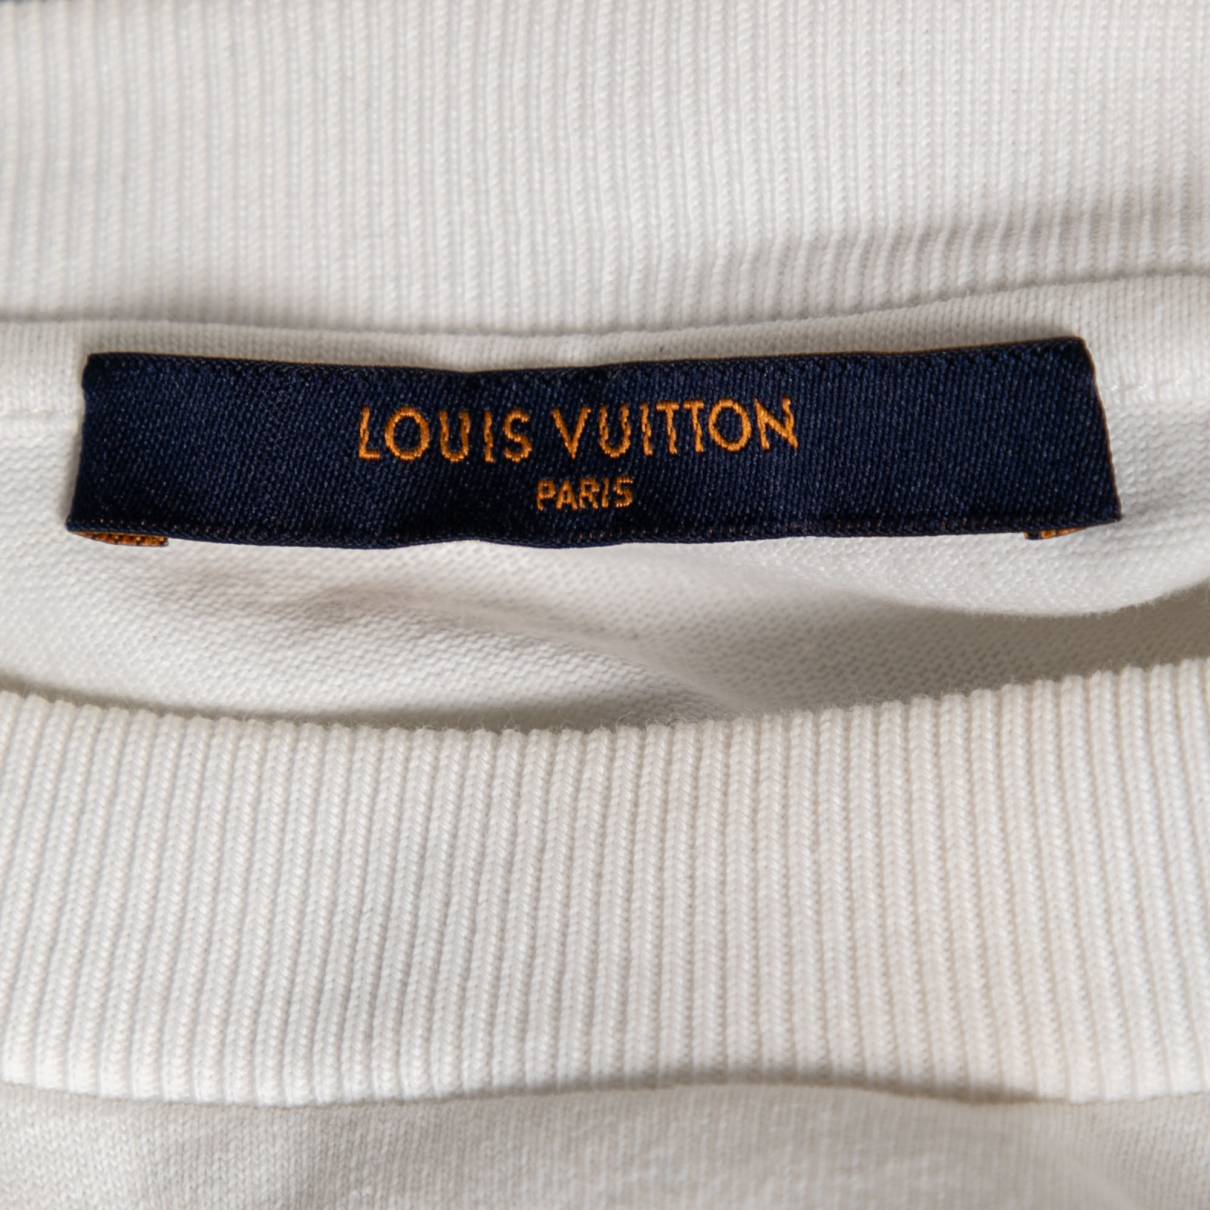 T-shirt Louis Vuitton White size M International in Cotton - 34126454